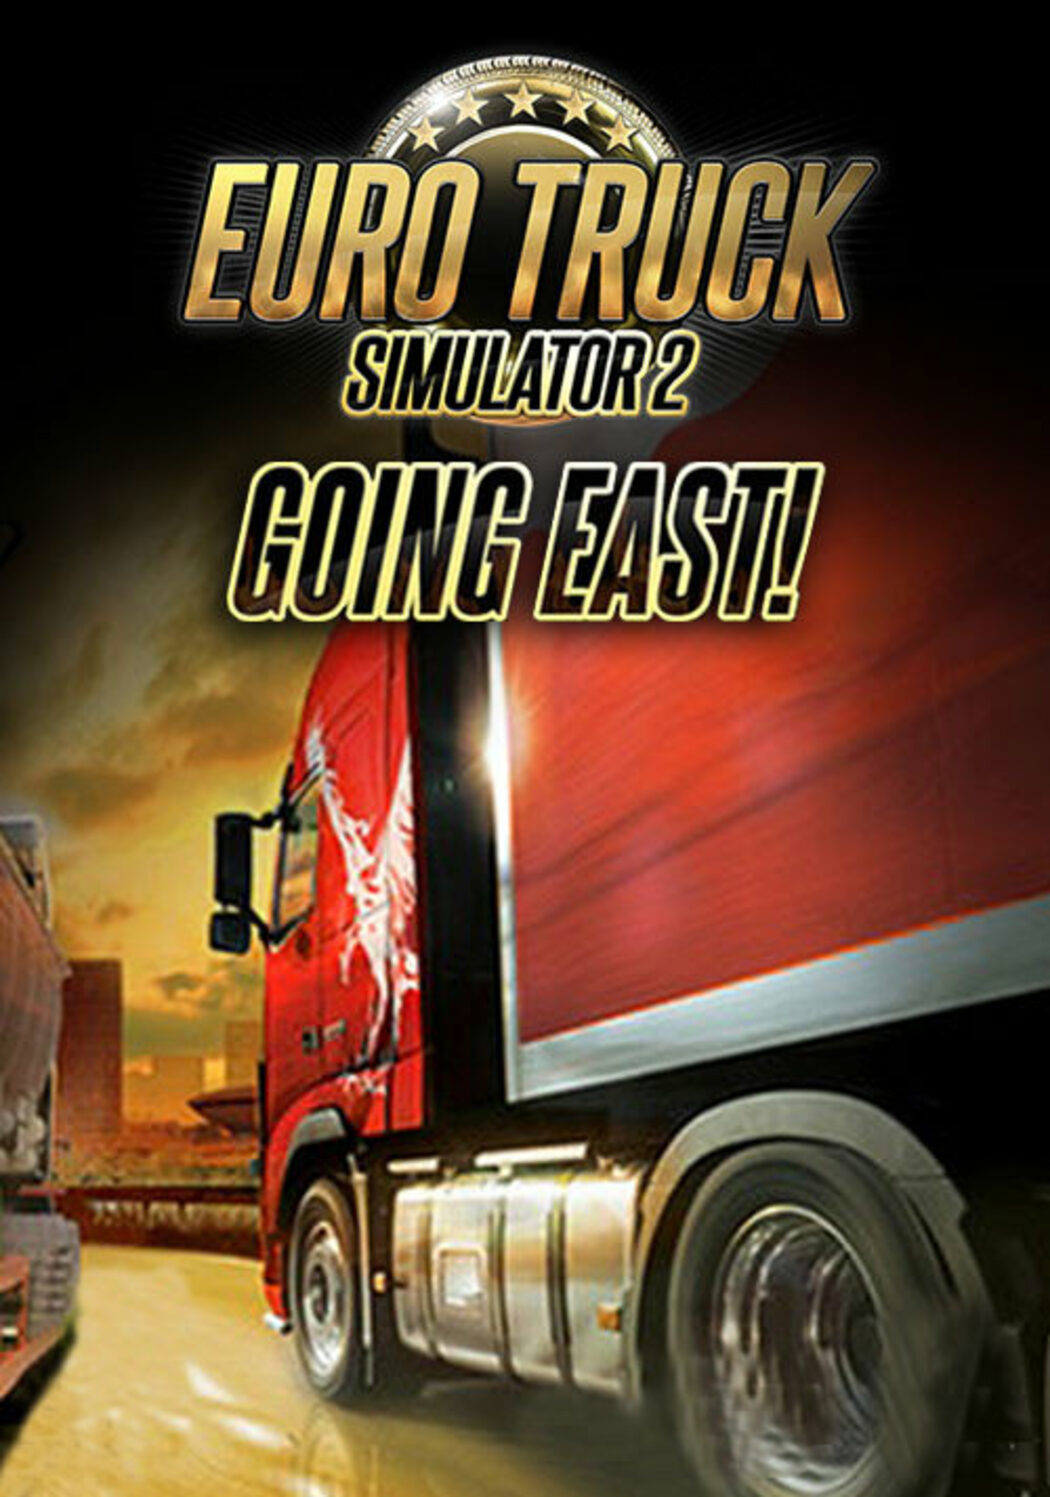 Buy Euro Truck Simulator 2 Going East For Steam